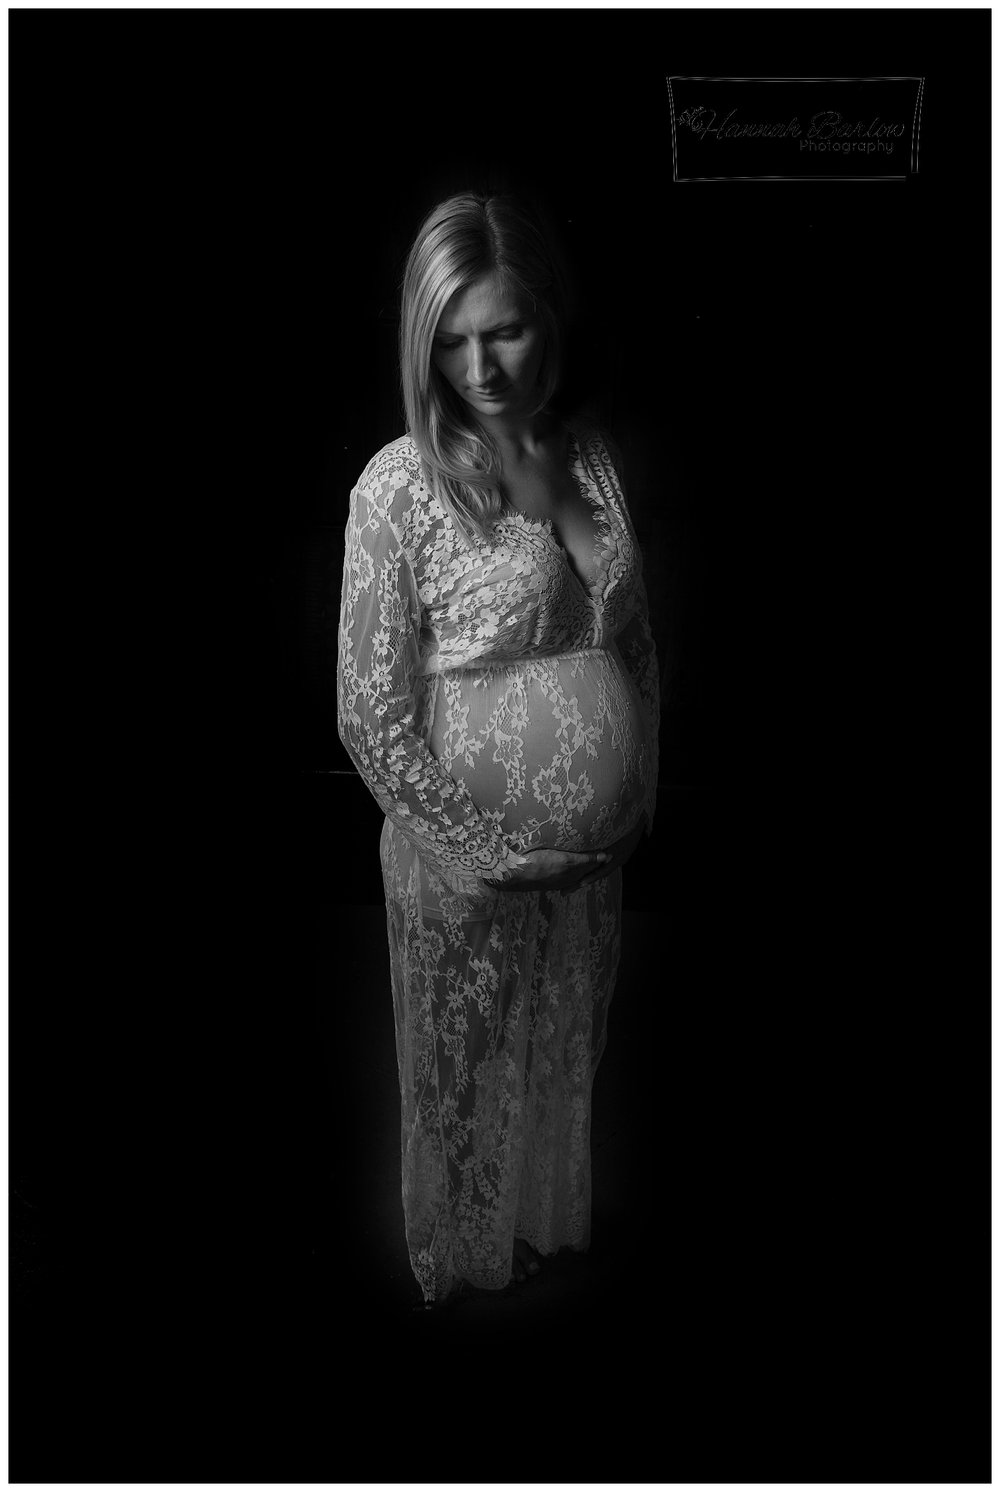  Black and White Maternity Photo Wellsburg, WV 